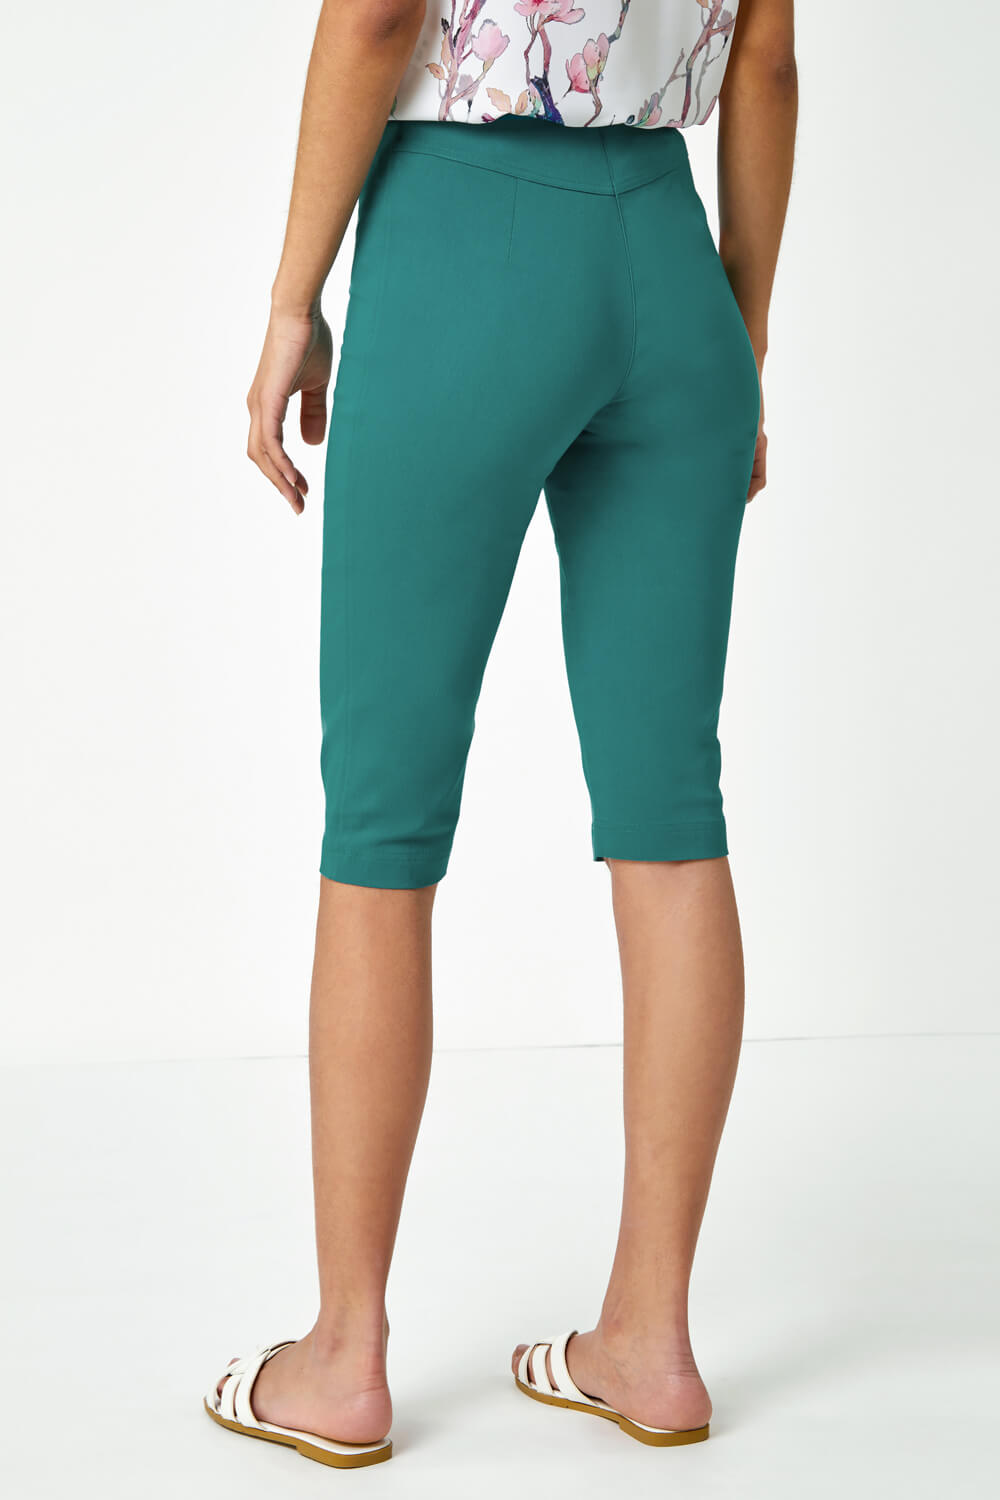 Jade Knee Length Stretch Shorts, Image 3 of 5